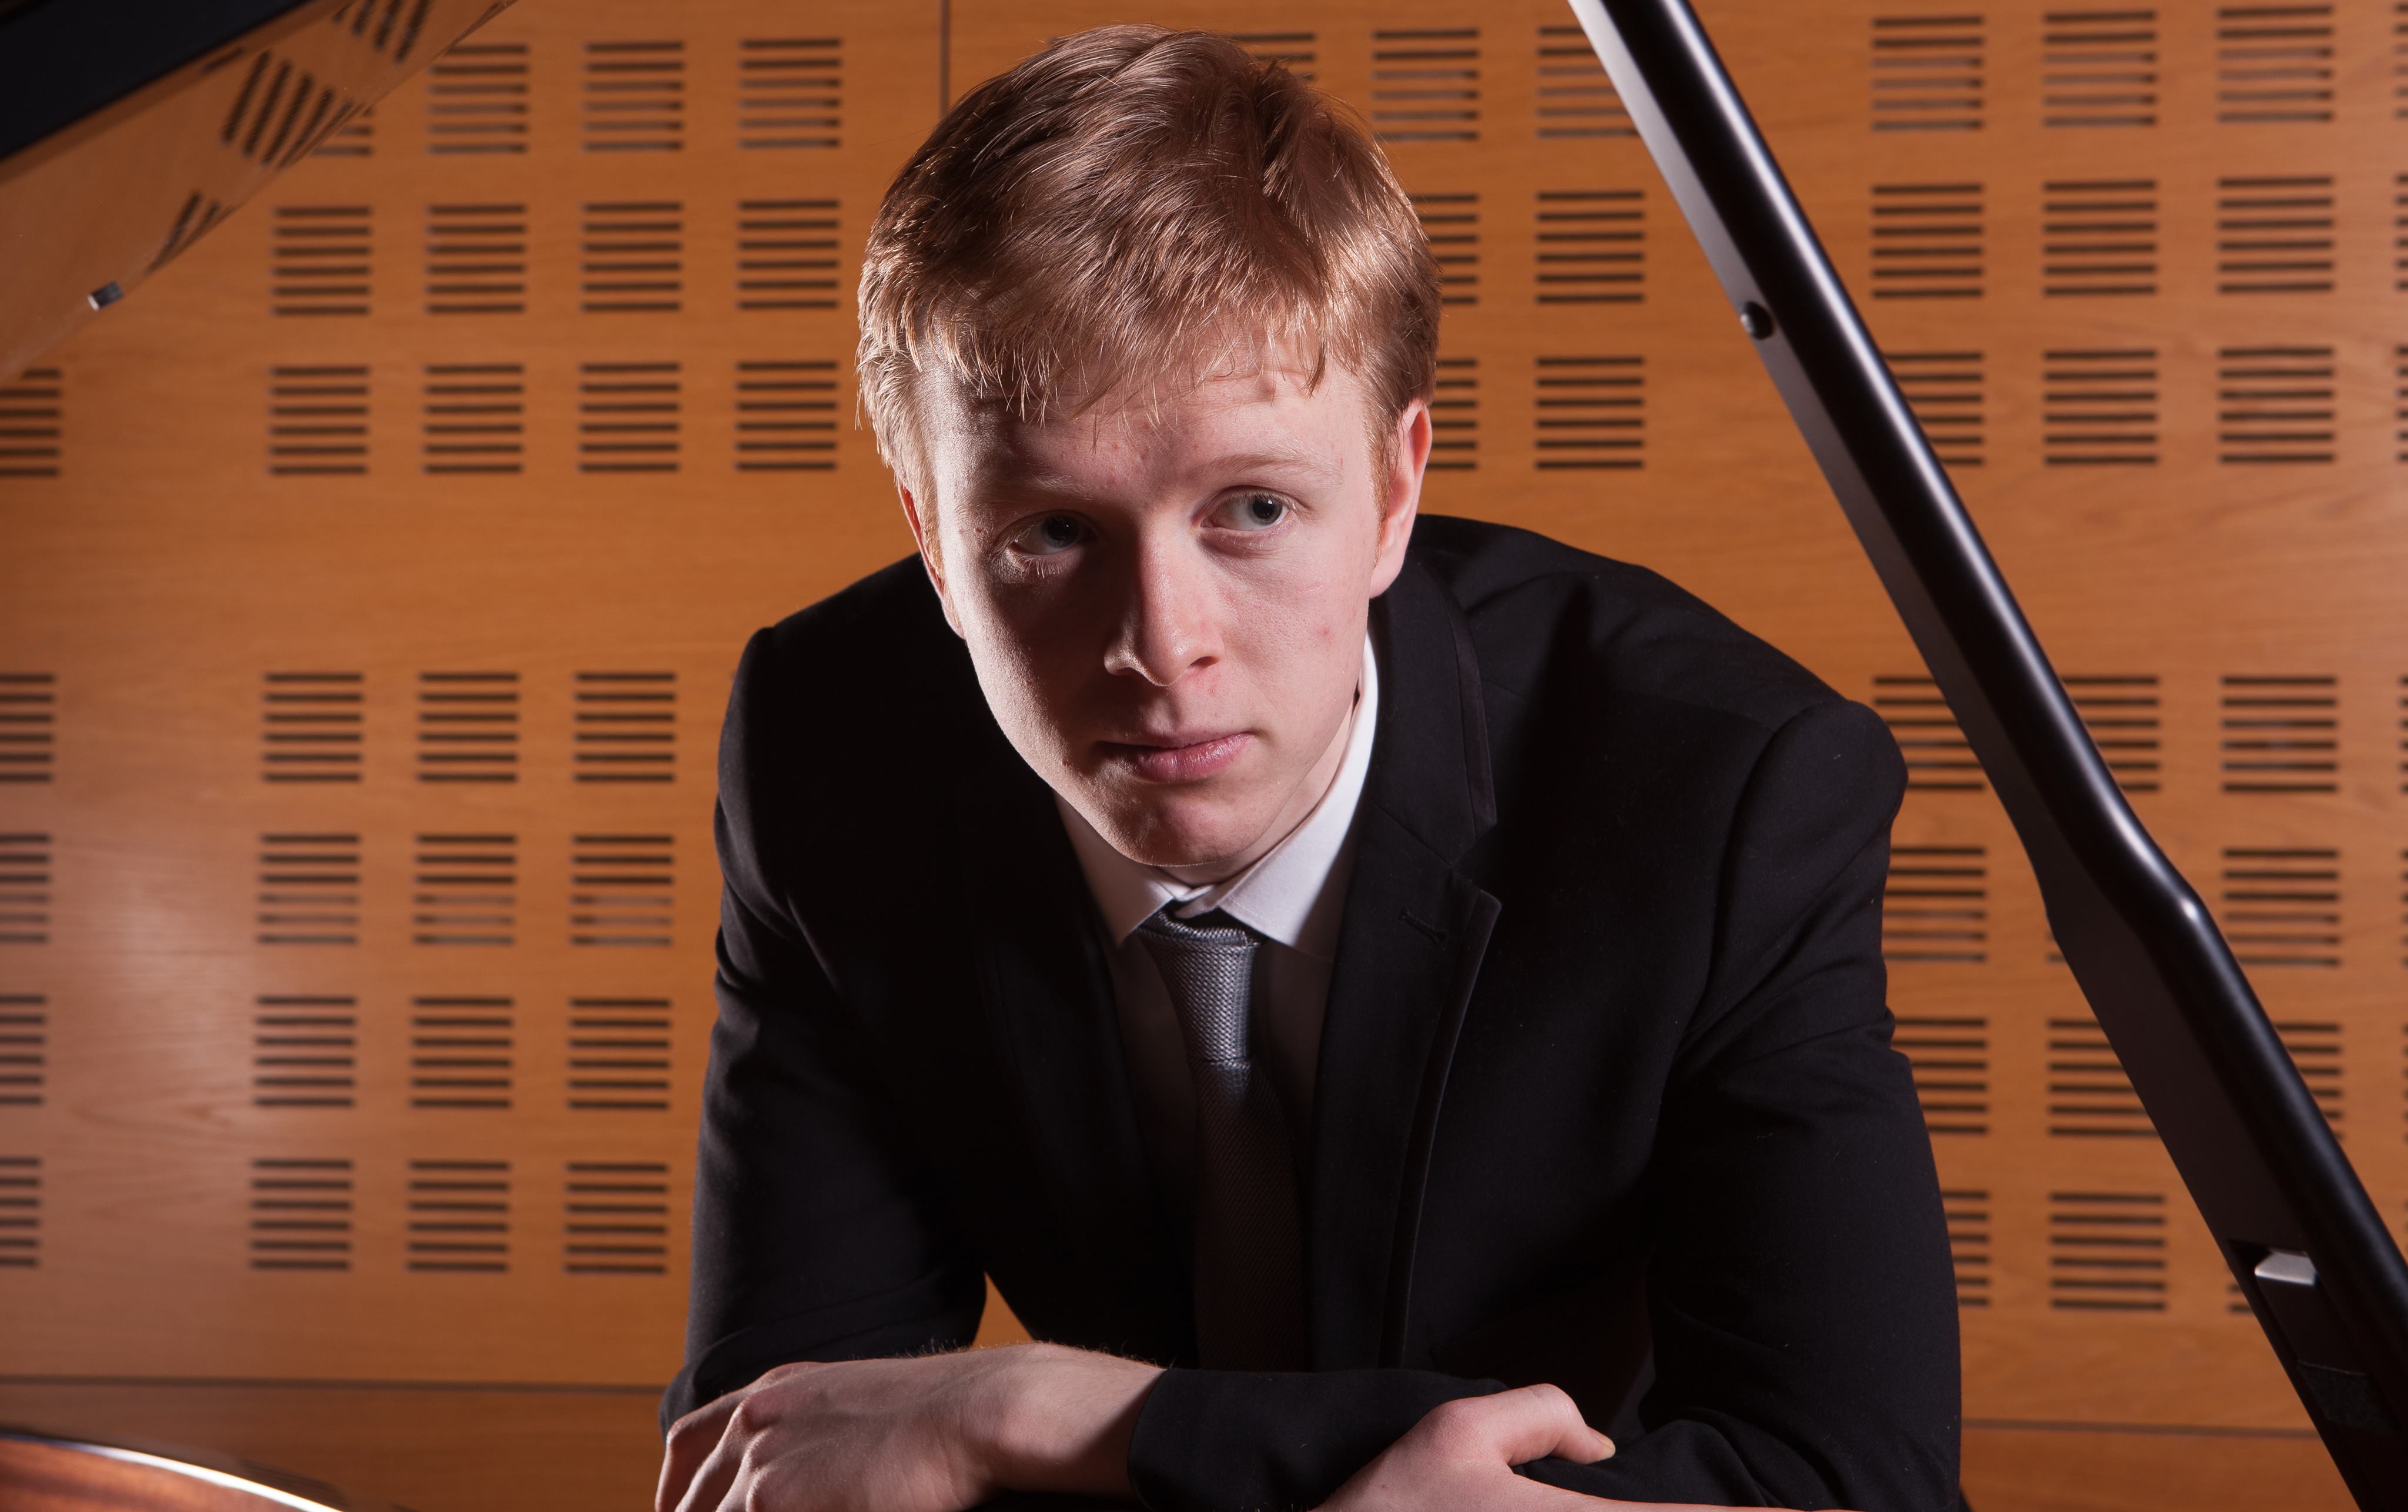 Young piano virtuoso Luke stars at top music festival